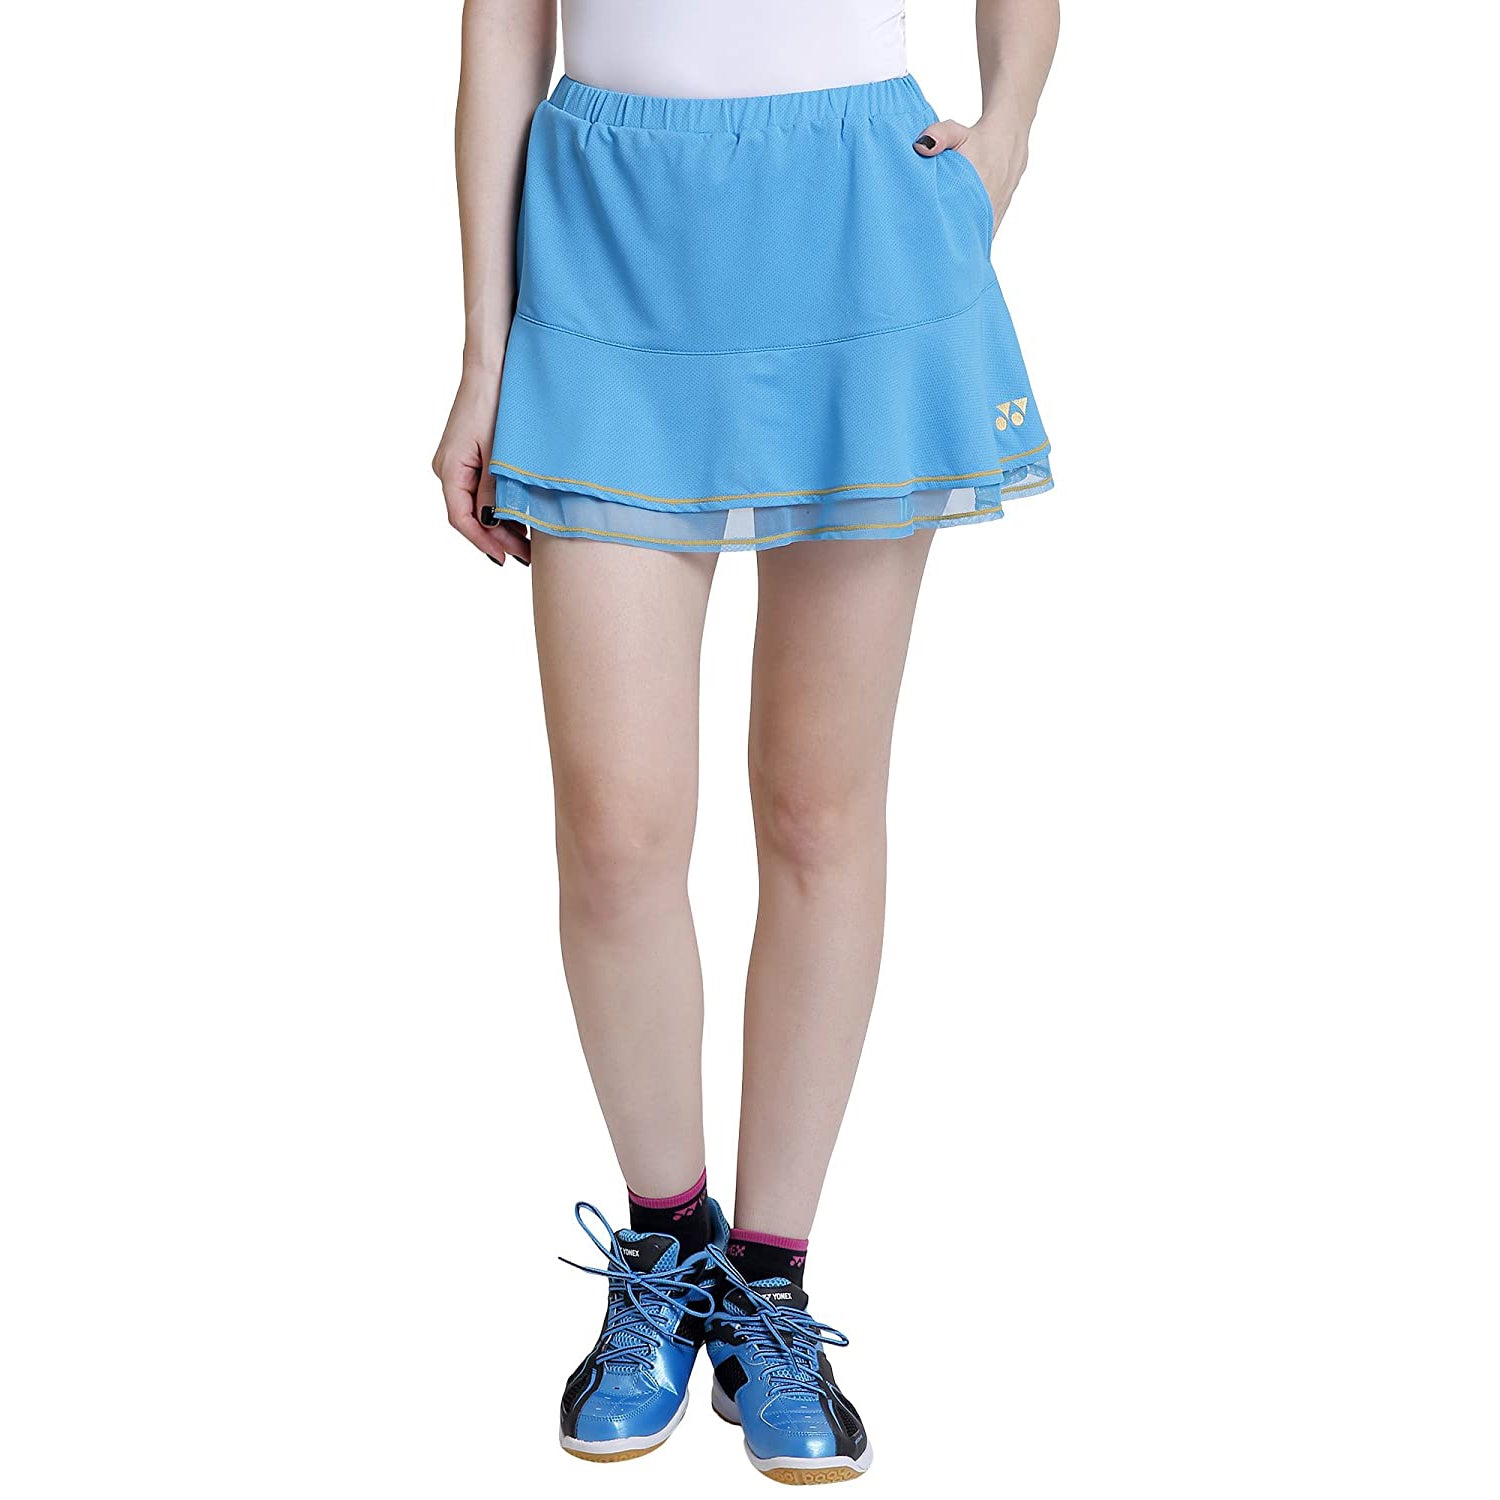 Yonex 26025 Skirt for Women, Bright Blue - Best Price online Prokicksports.com